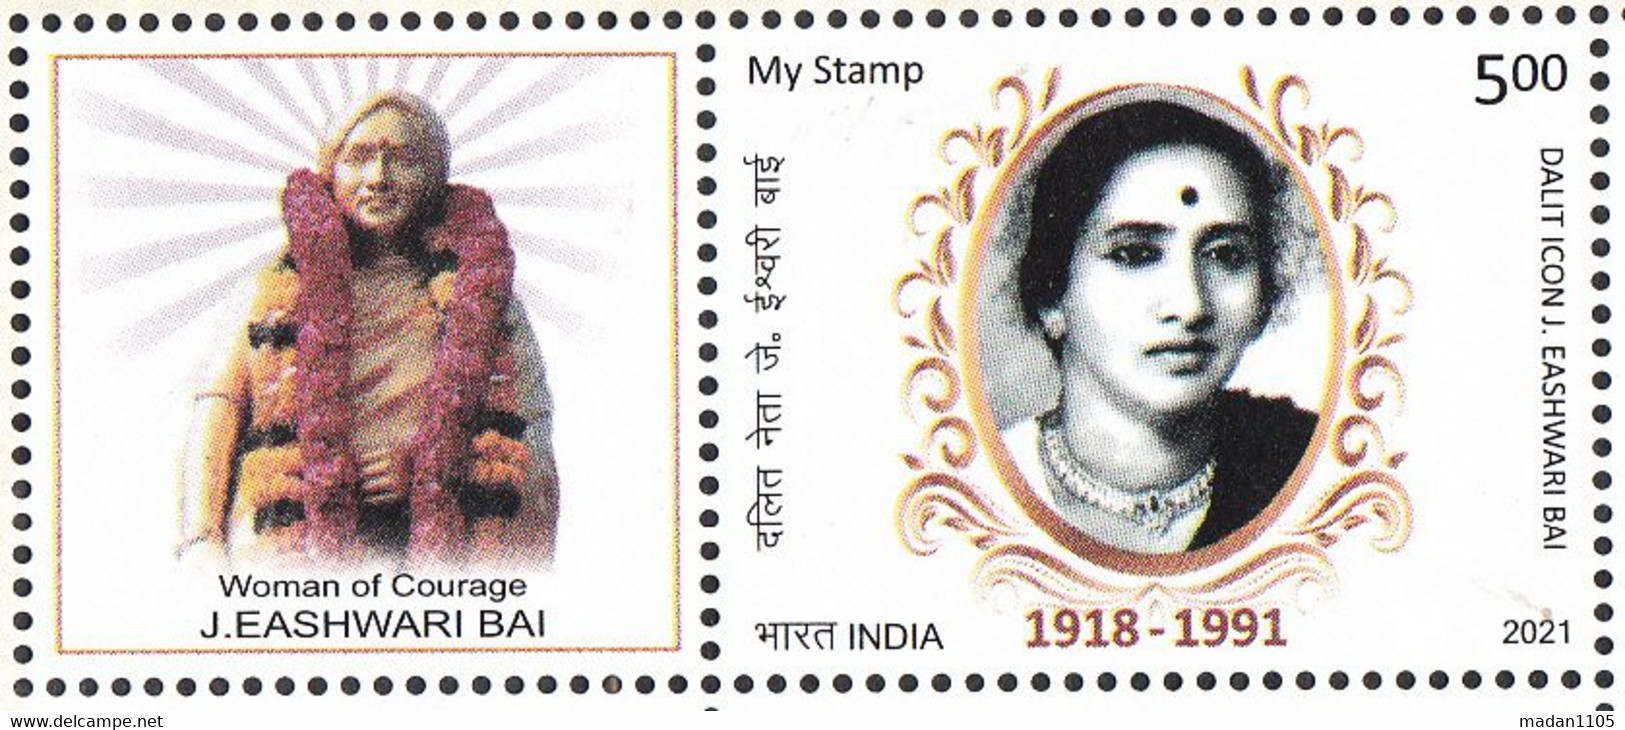 INDIA 2021 MY STAMP , Celebrity  LATE (1918-1991)  J EASHWARI BAI, (Dalit Icon), Woman Of Courage,LIMITED ISSUE  MNH(**) - Nuevos